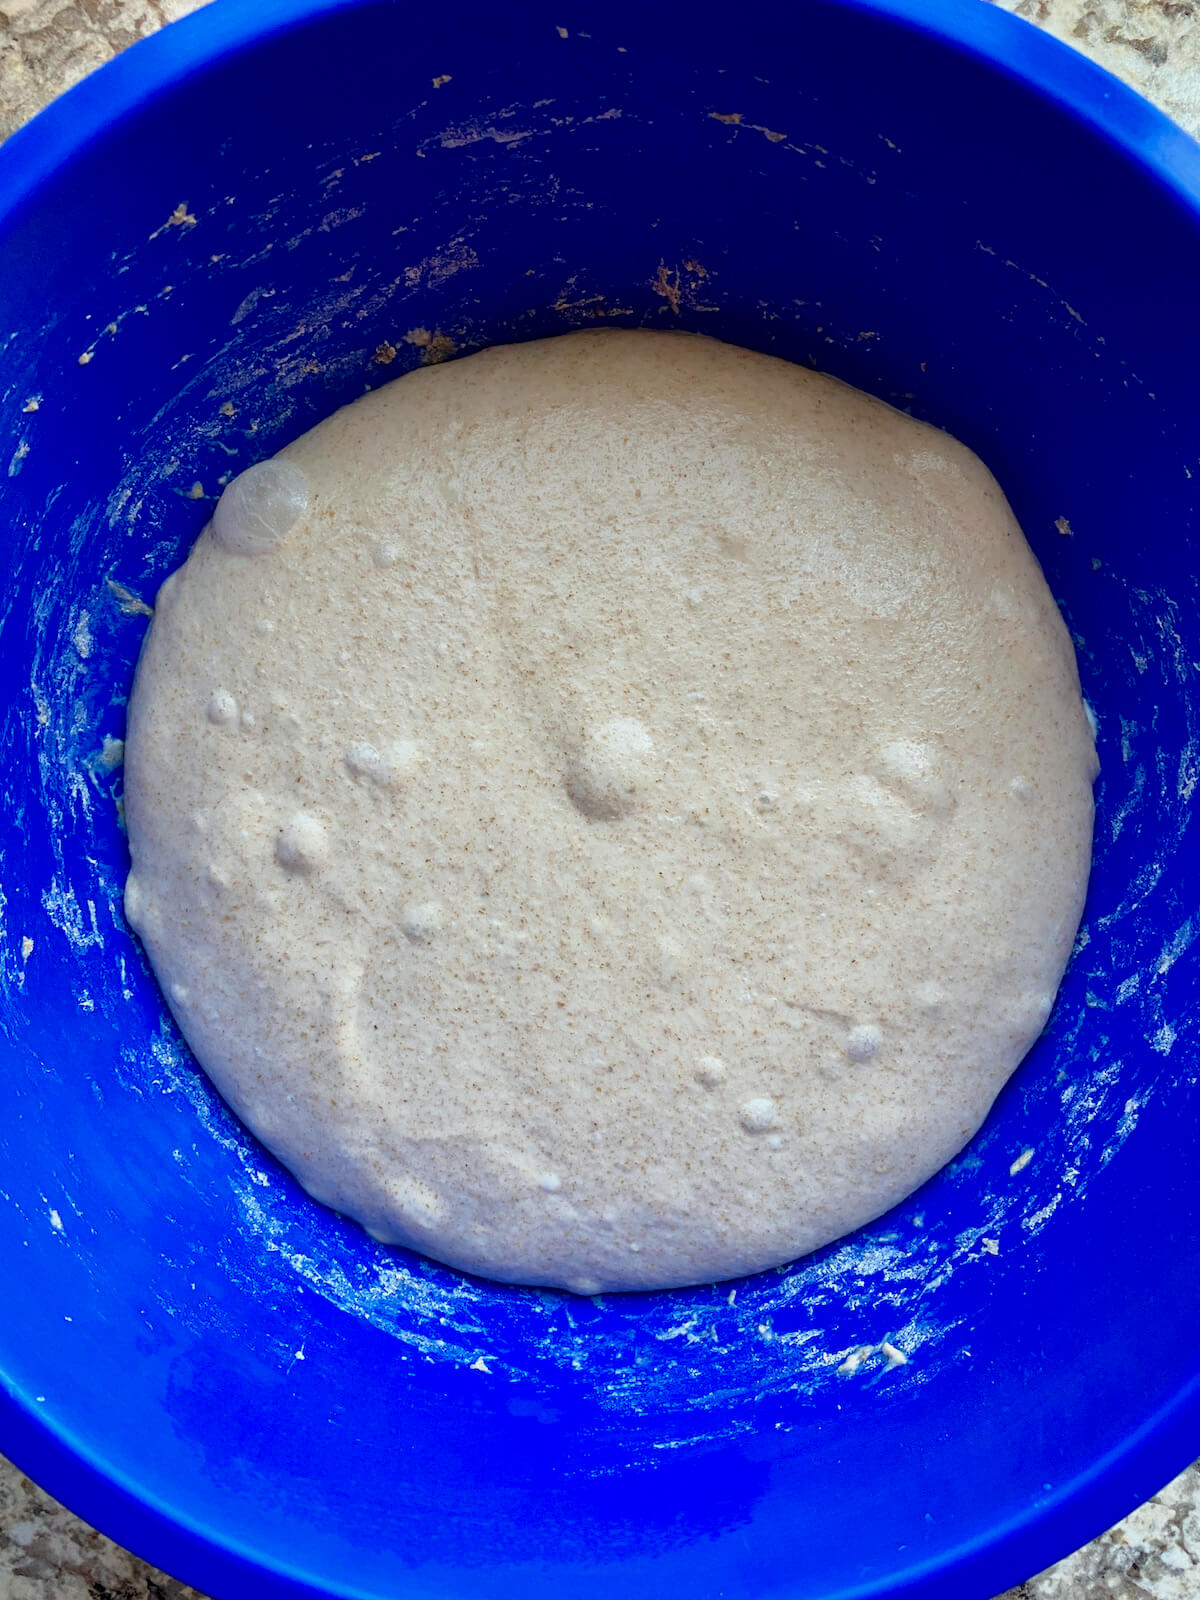 The dough after bulk fermentation.